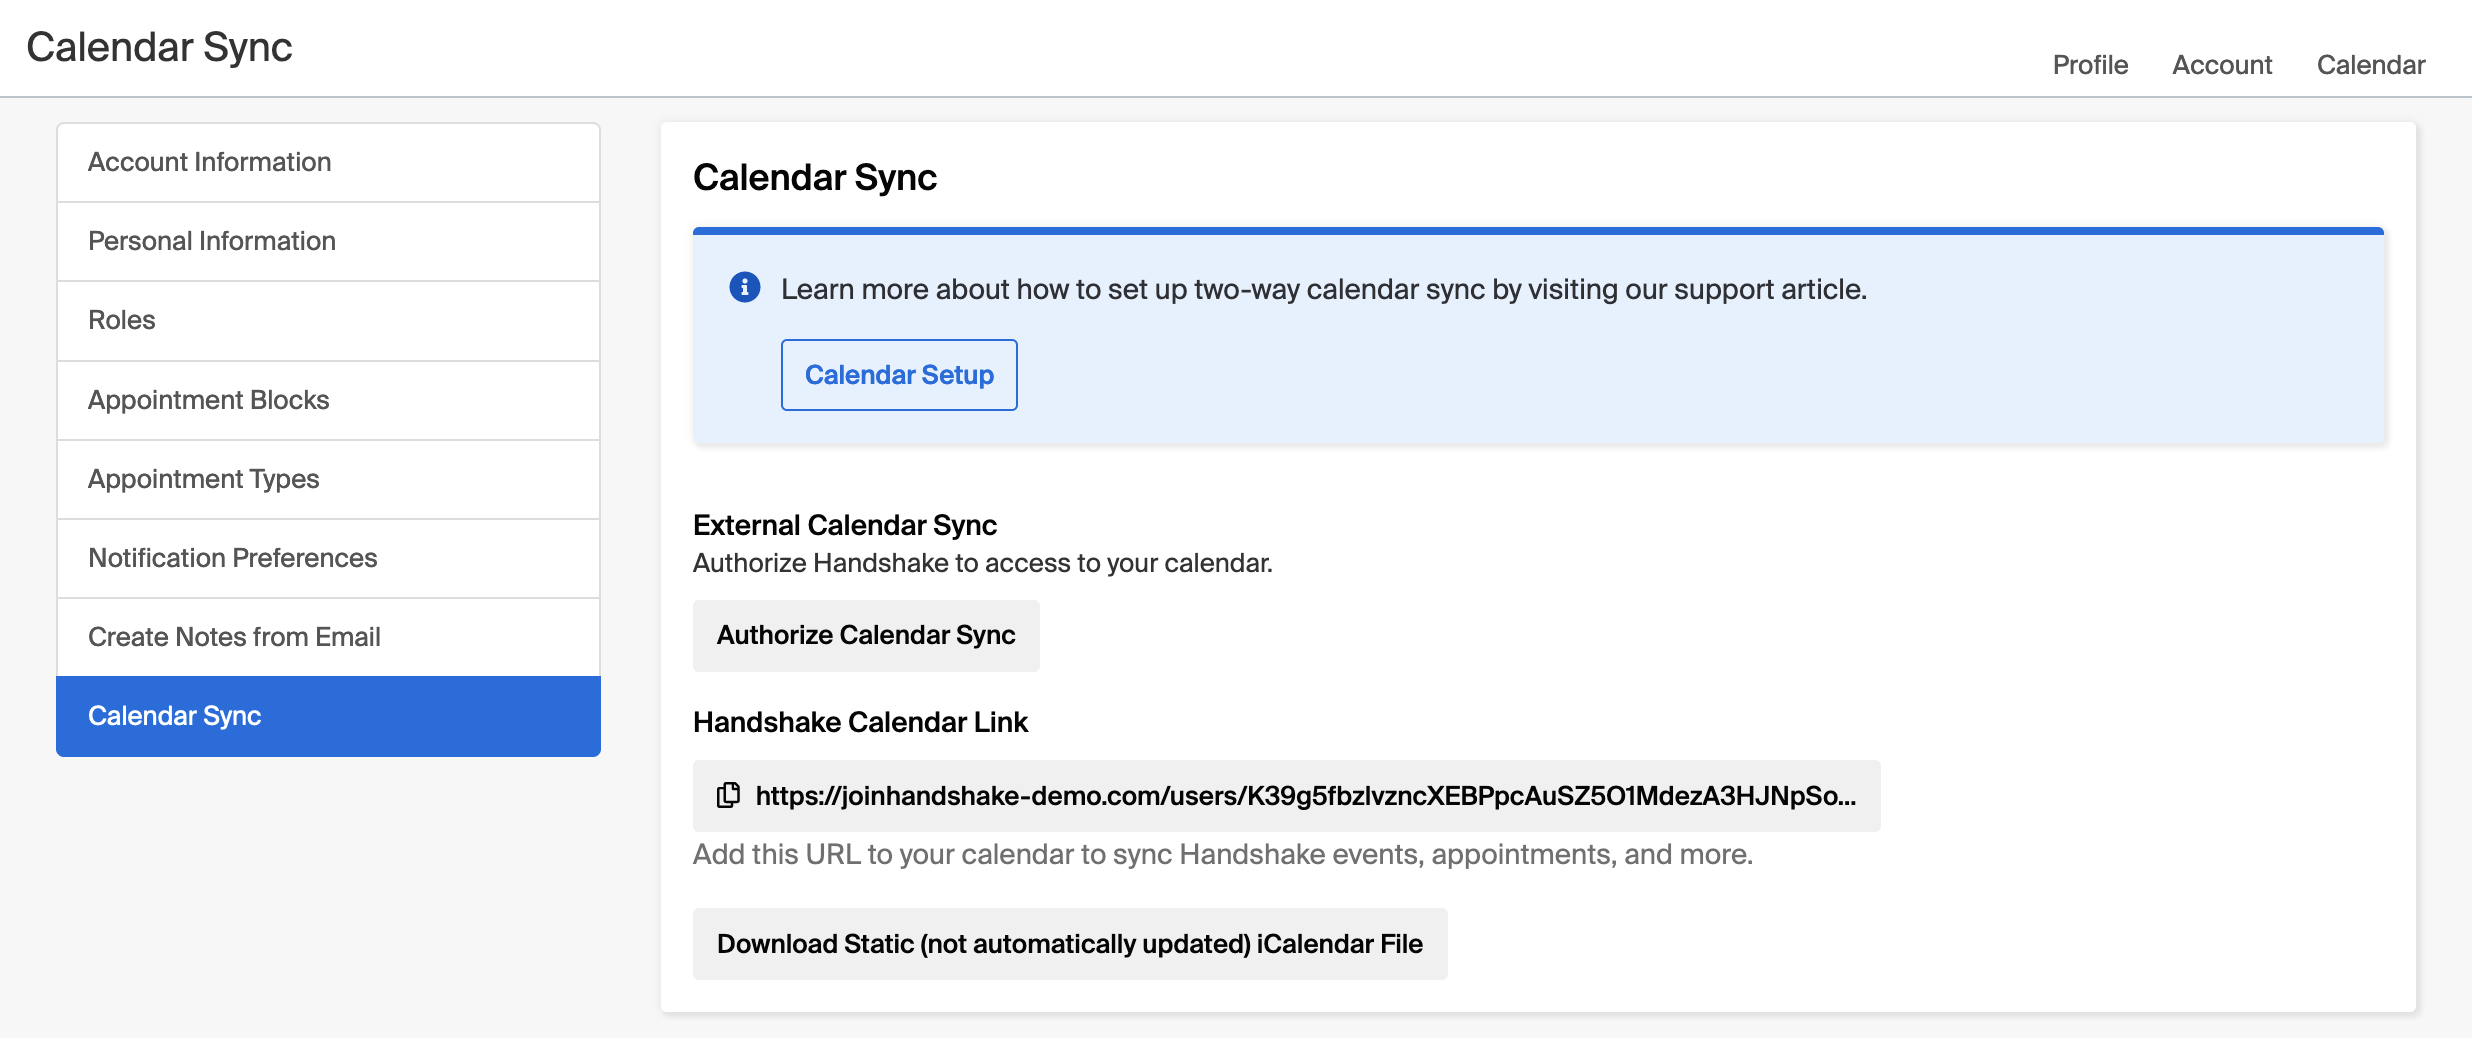 Calendar_Sync_under_User_Settings.png